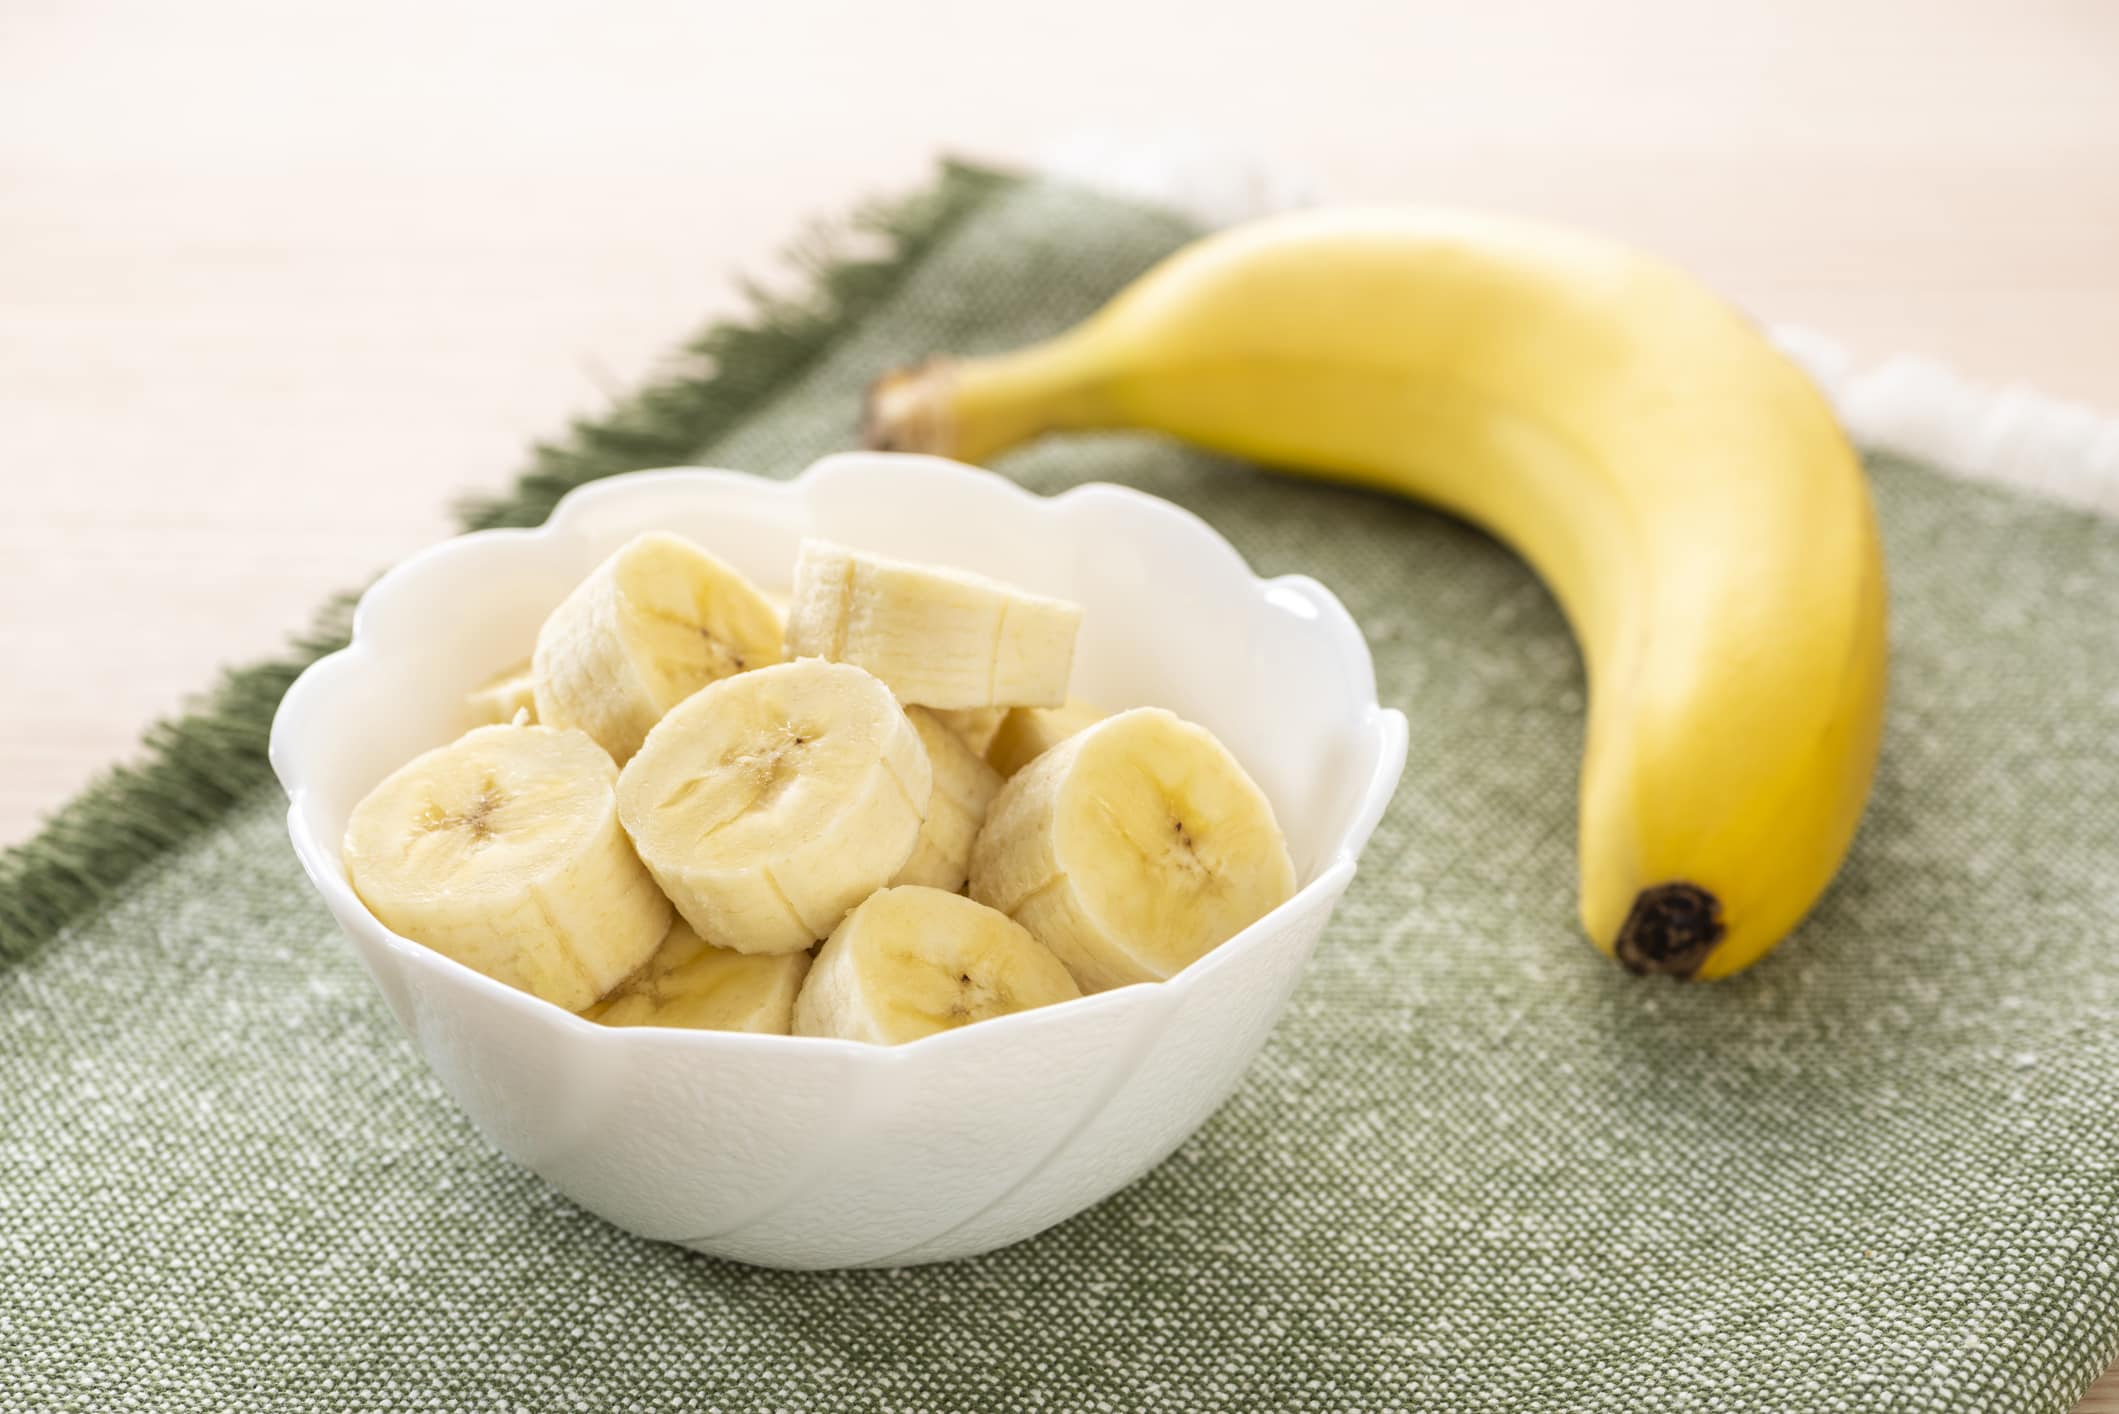 Cut bananas in the bowl